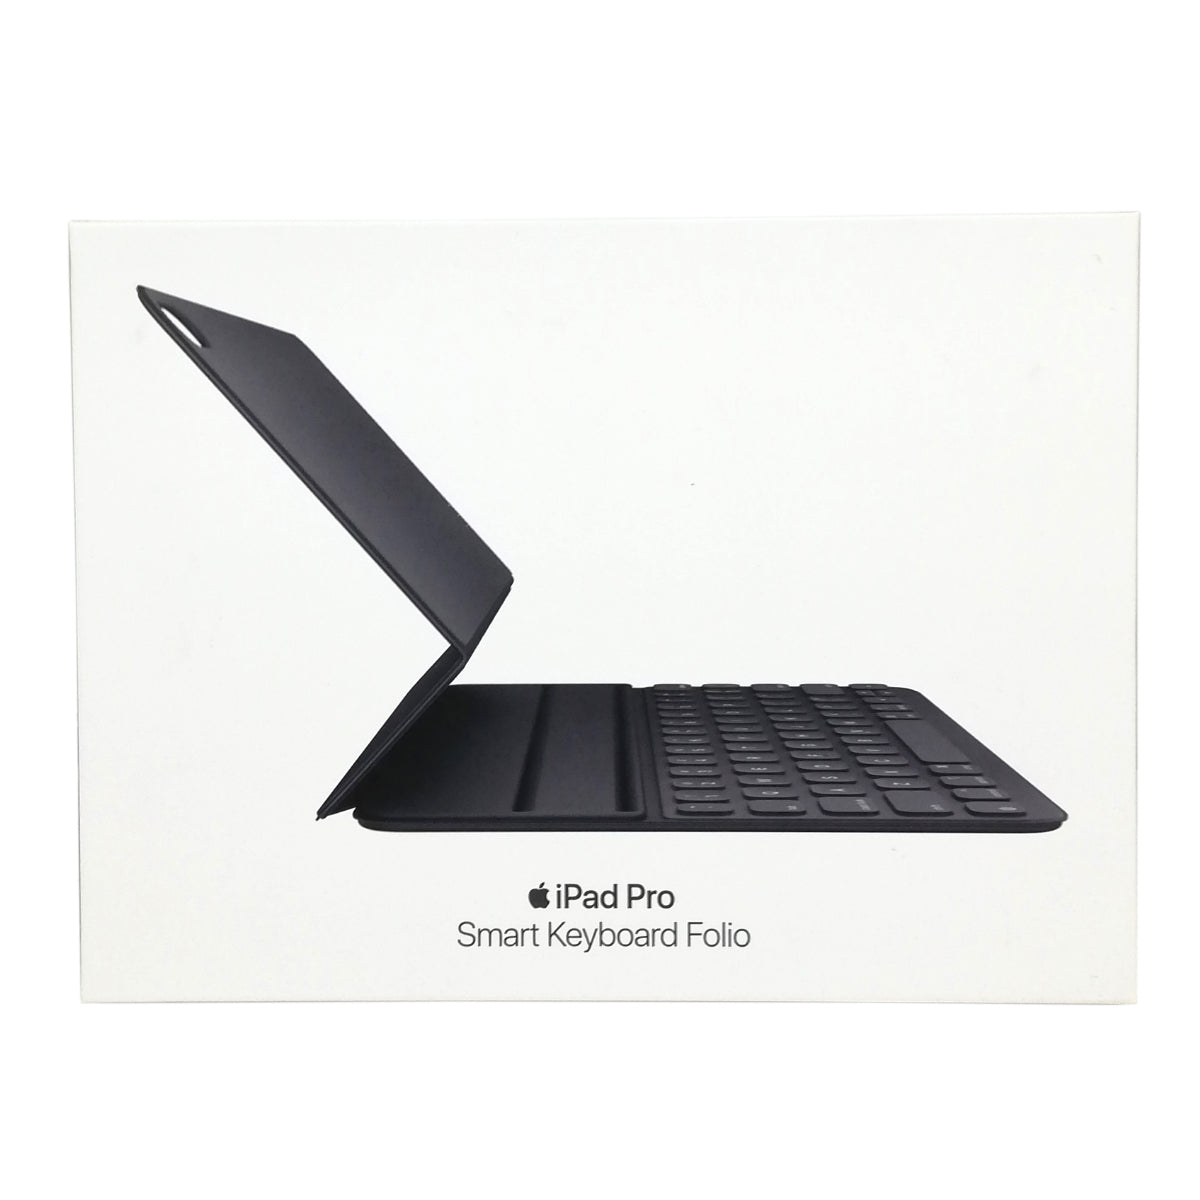 中古品】 iPadPro(11-inch) Smart Keyboard Folio MU8G2J/A[管理番号 